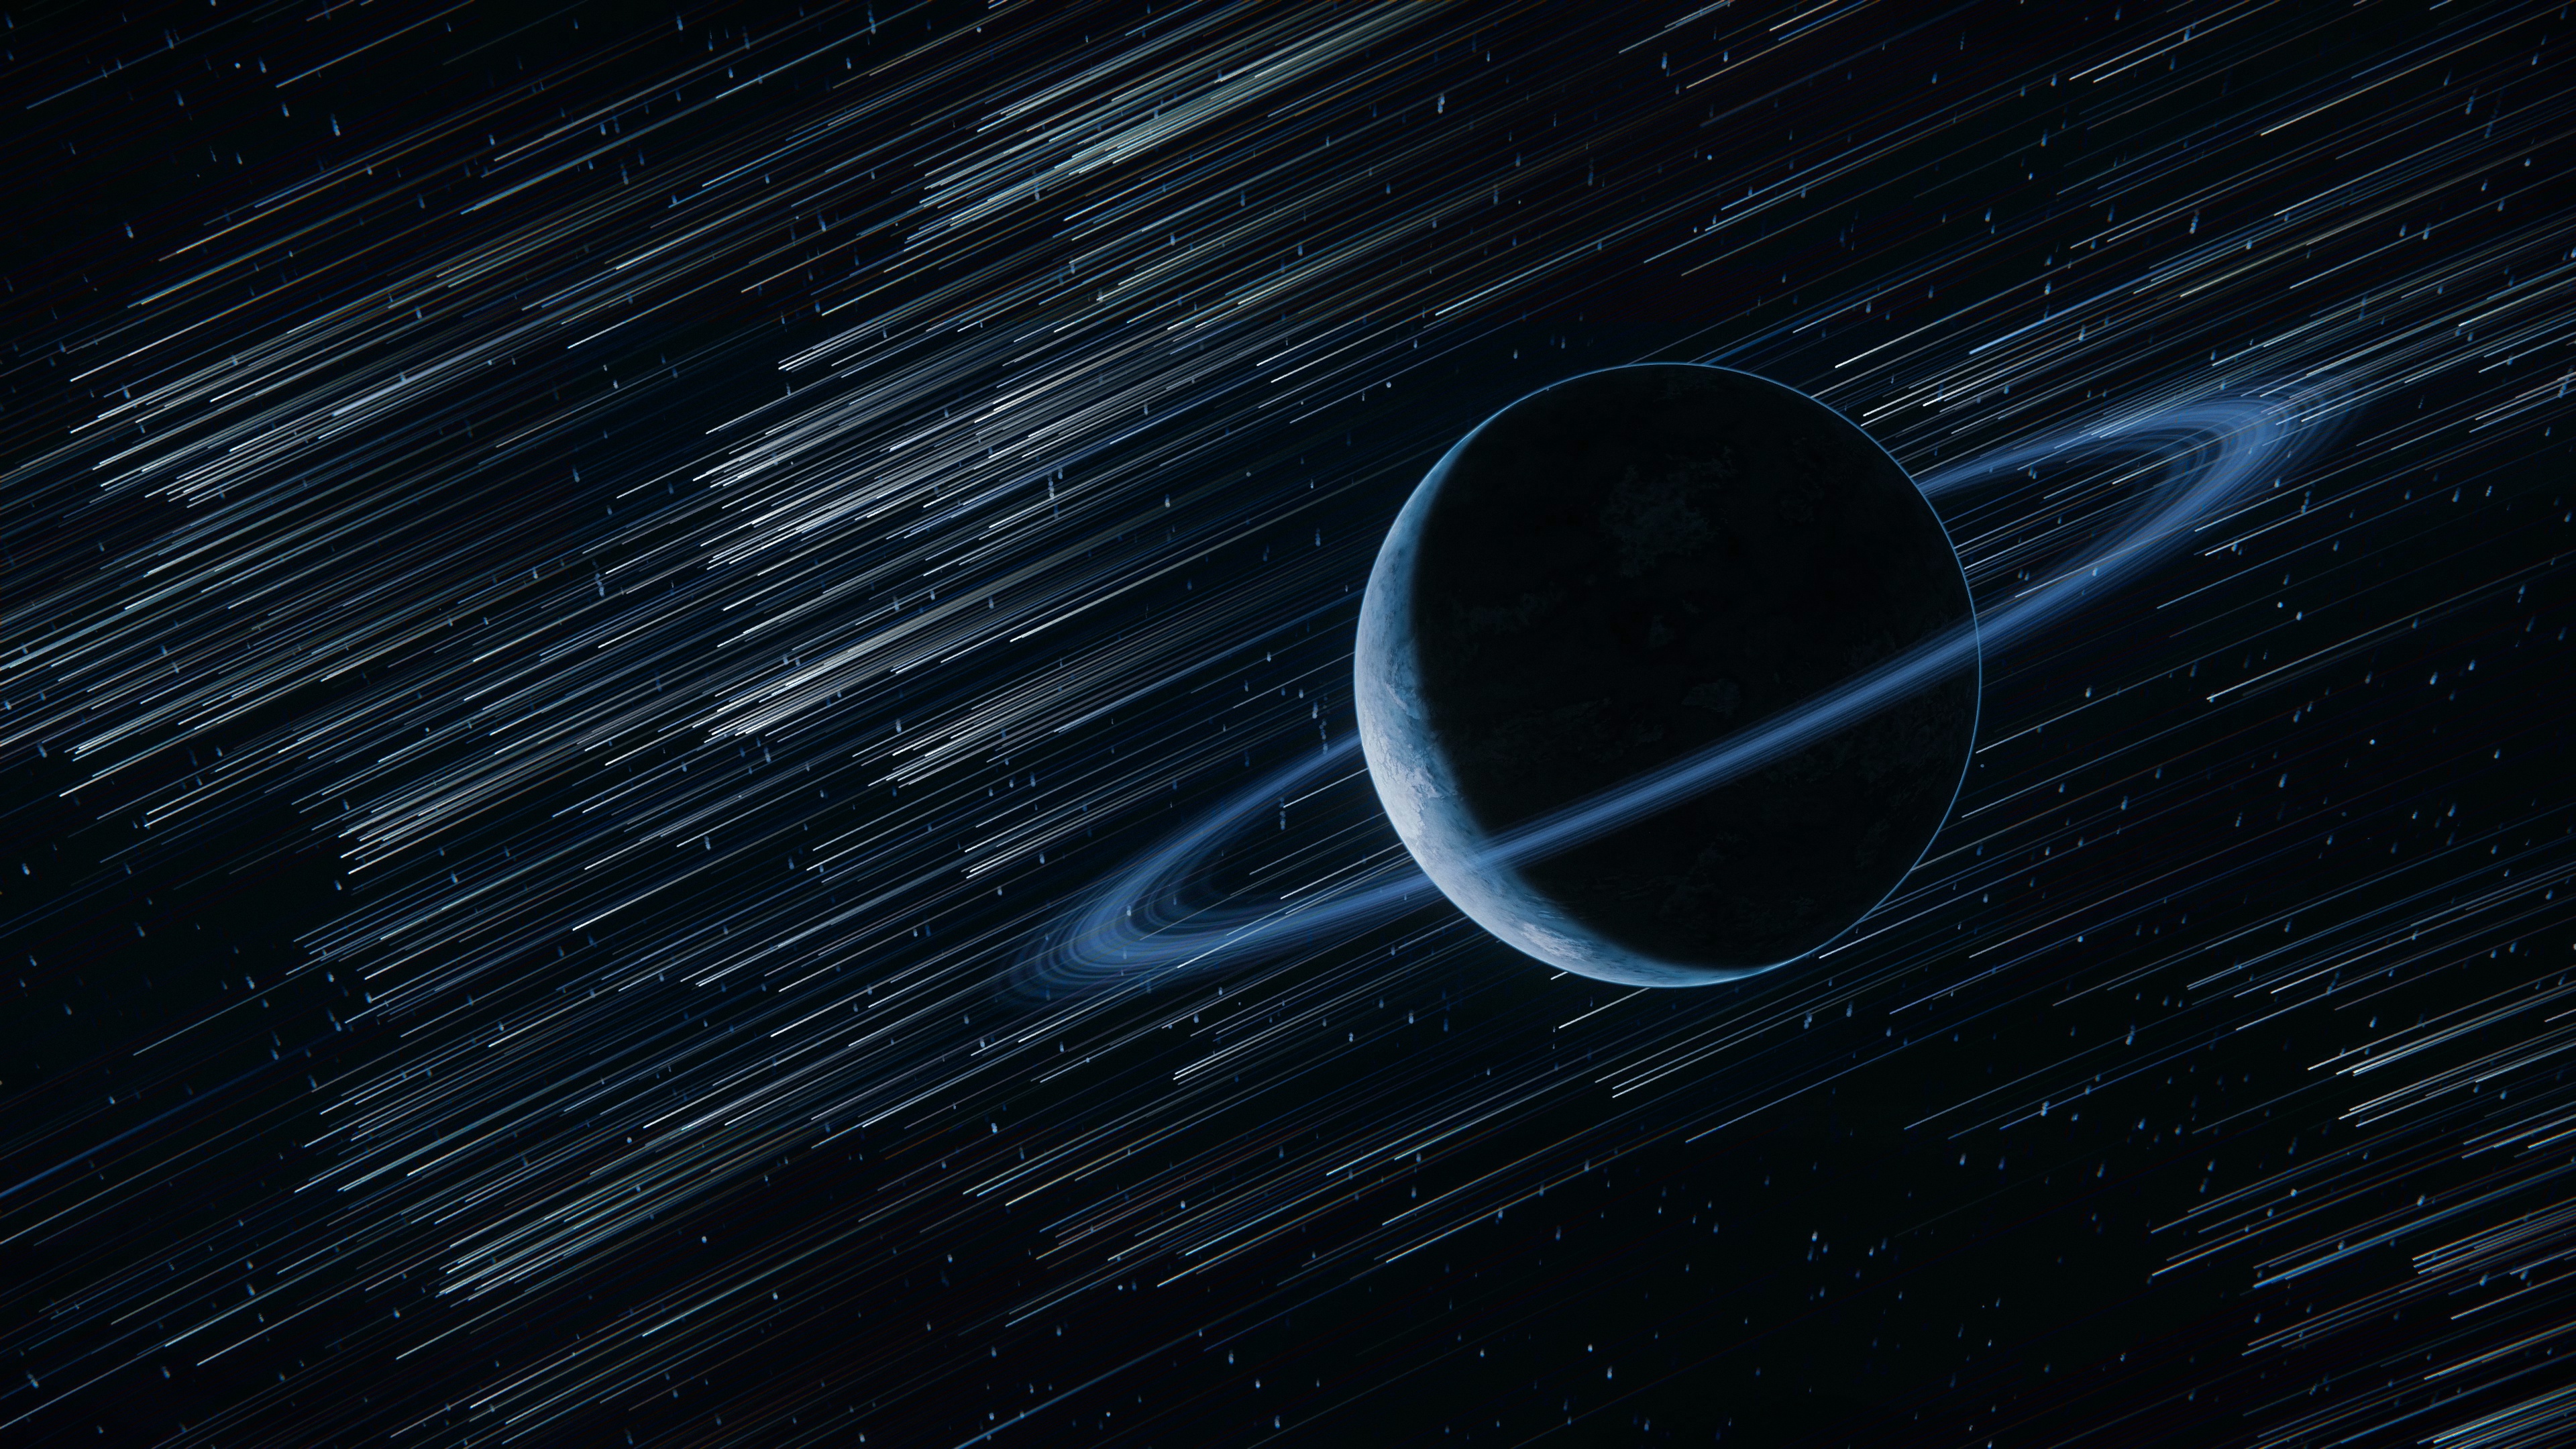 Wallpaper ID 32326  Saturn planet 4k free download